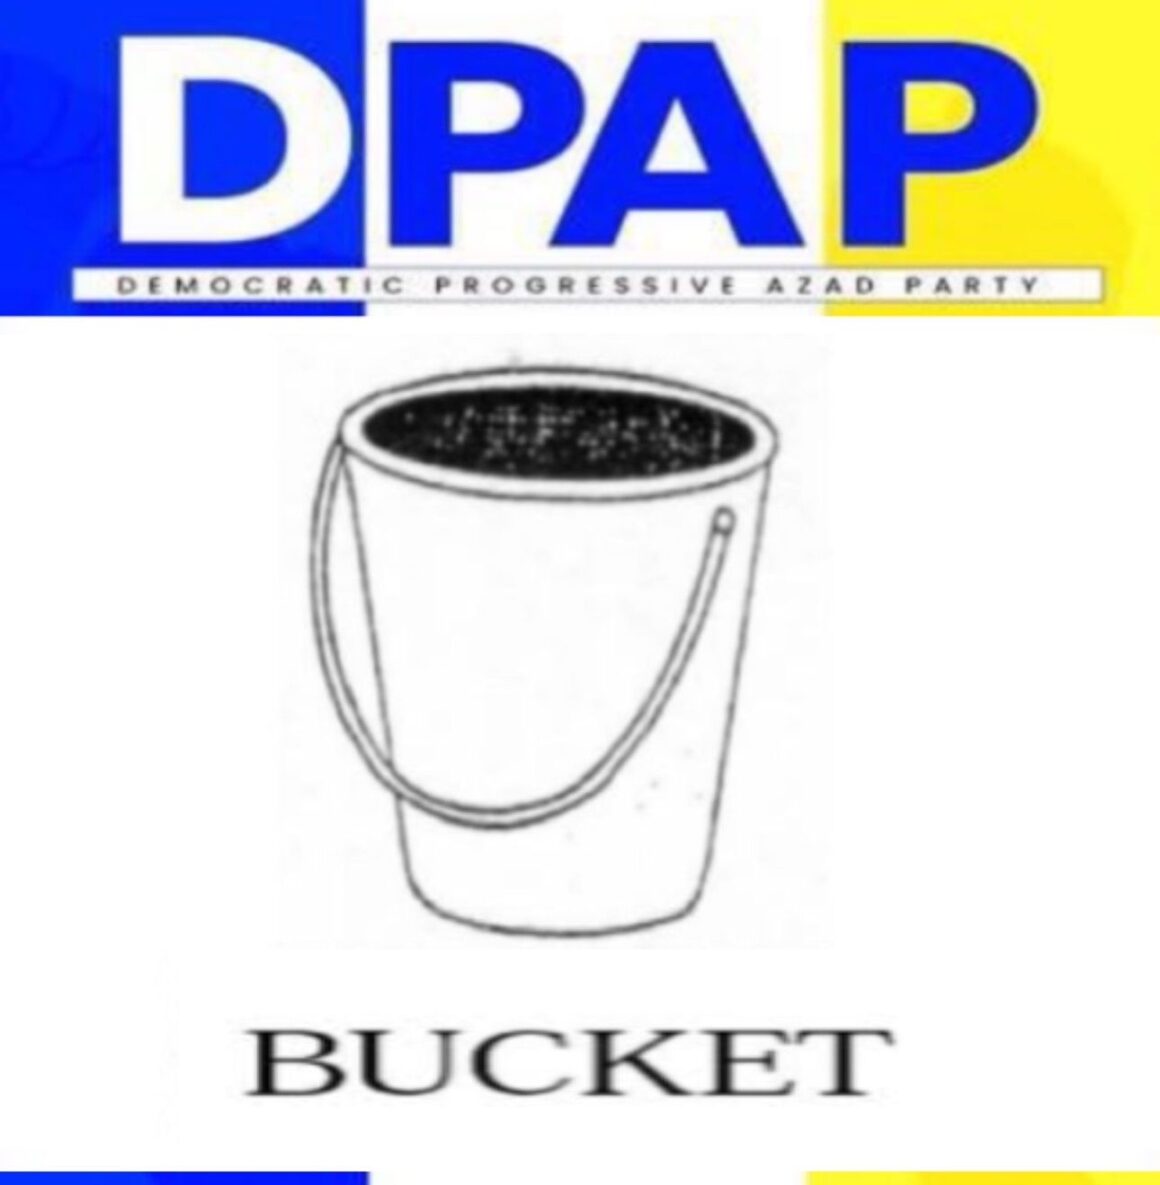 ECI allots ‘Bucket’ symbol to DPAP for Lok Sabha polls